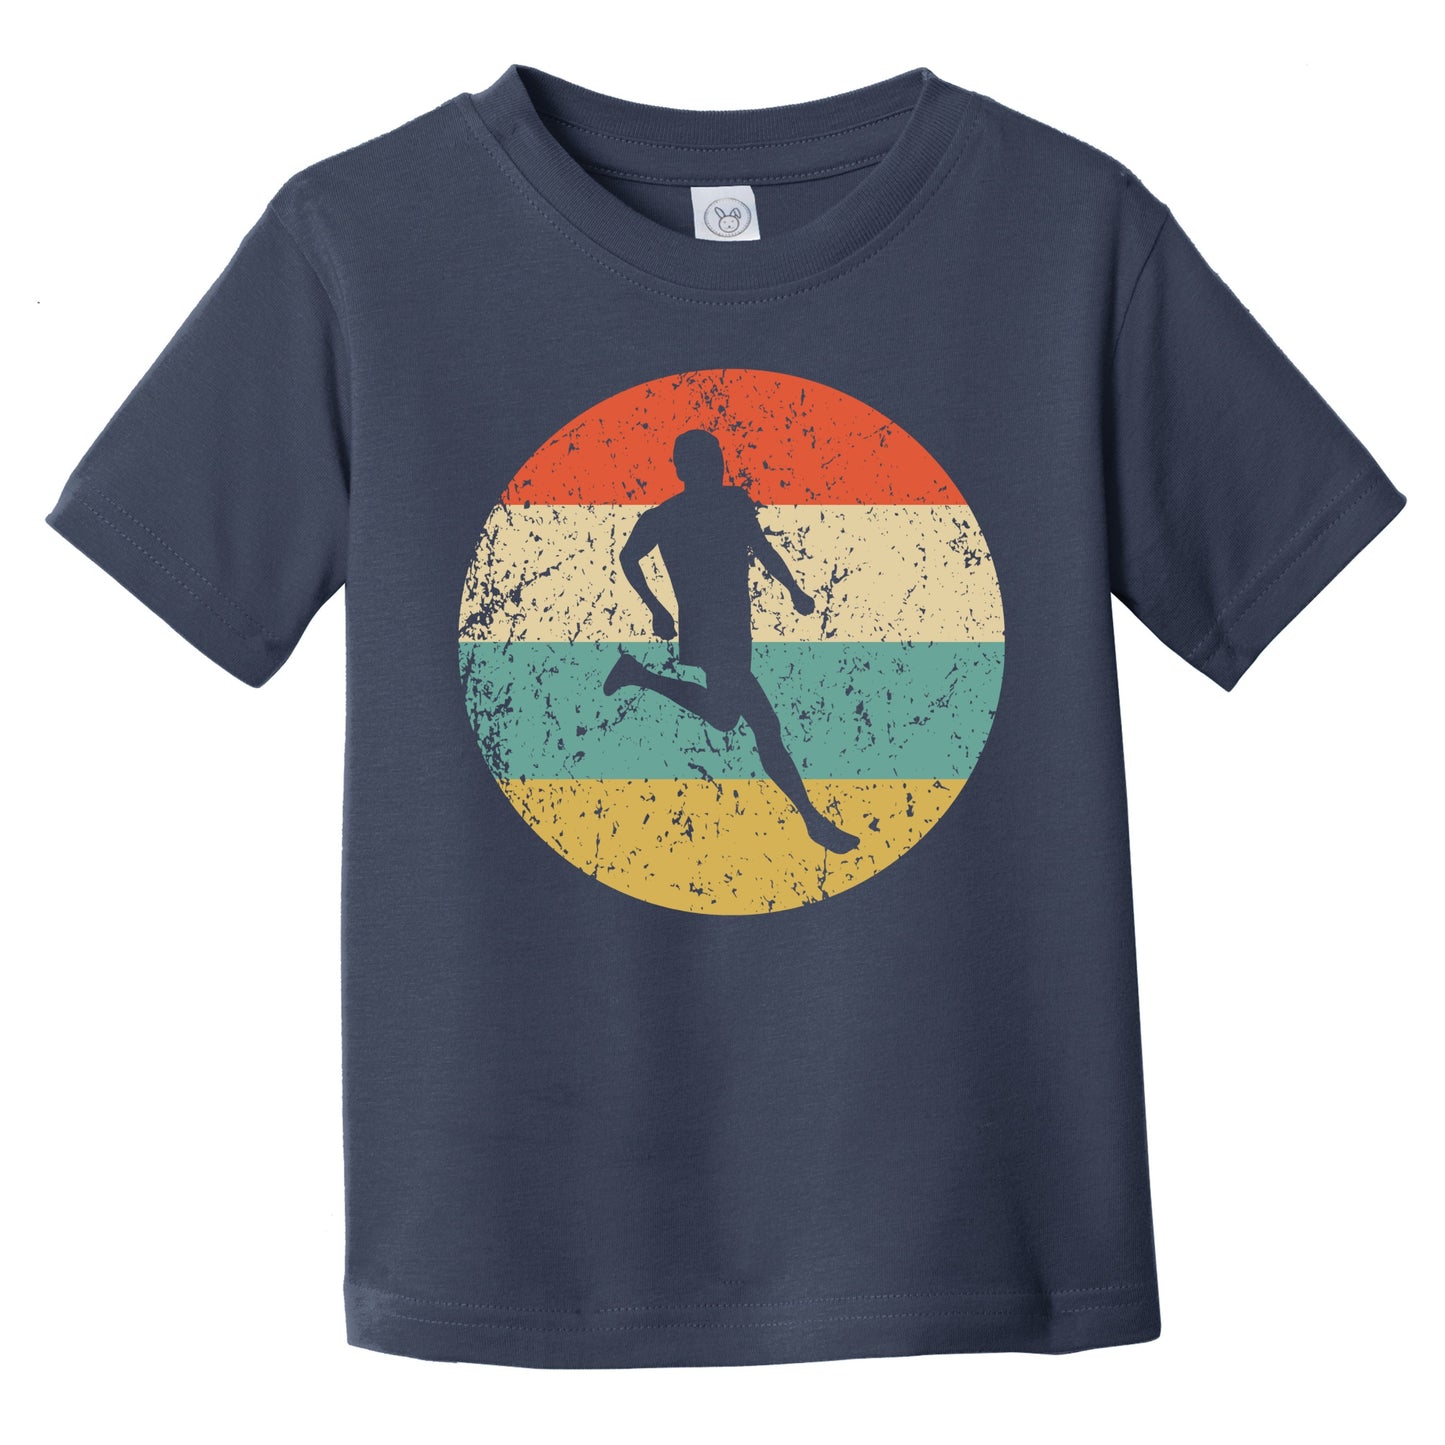 Retro Runner Icon Cross Country Infant Toddler T-Shirt